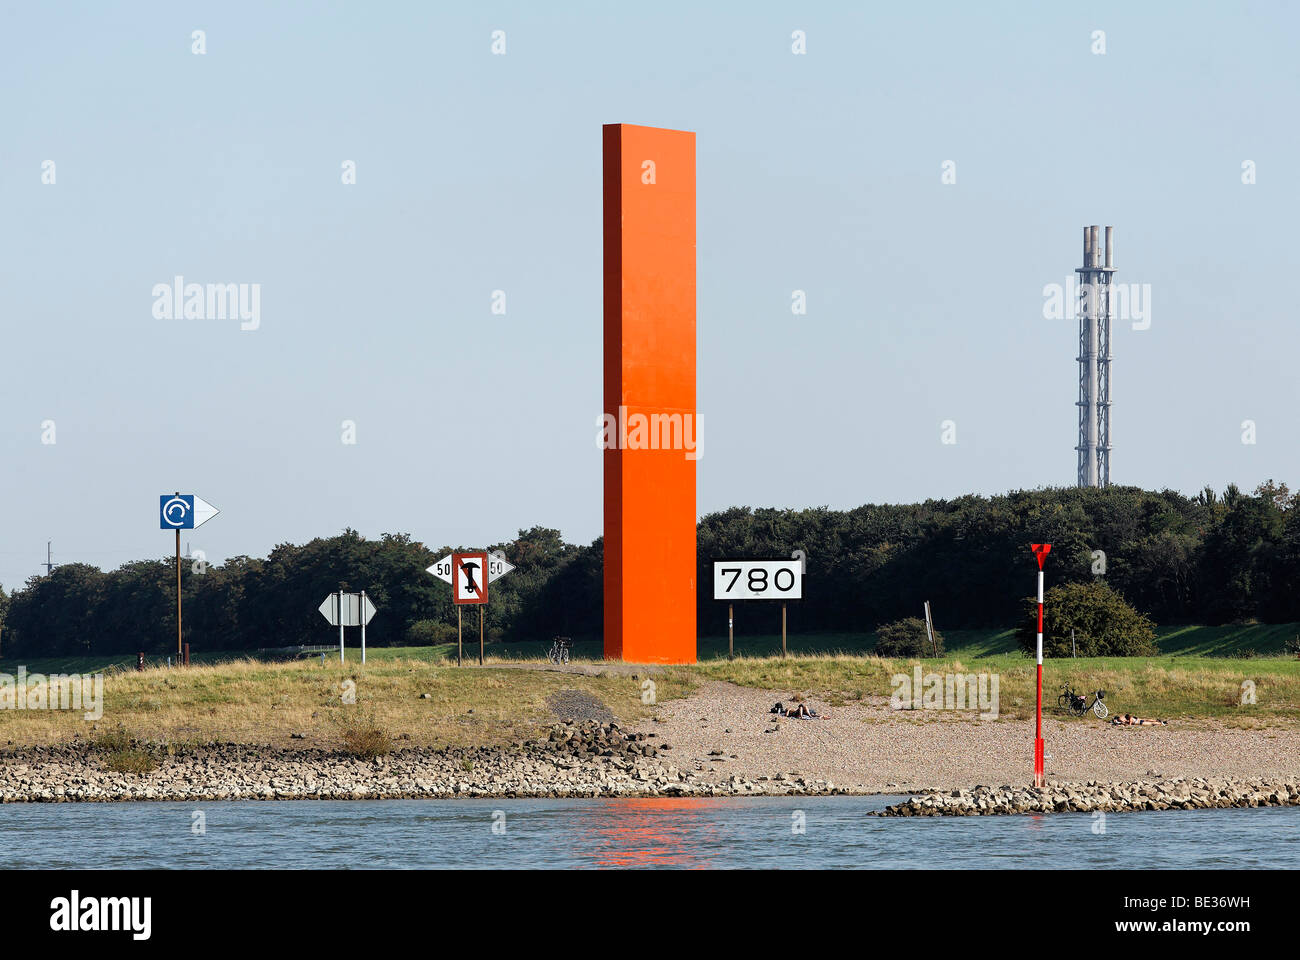 Landmark Rheinorange by Lutz Frisch, Ruhrort Duisburg, North Rhine-Westphalia, Germany, Europe Stock Photo